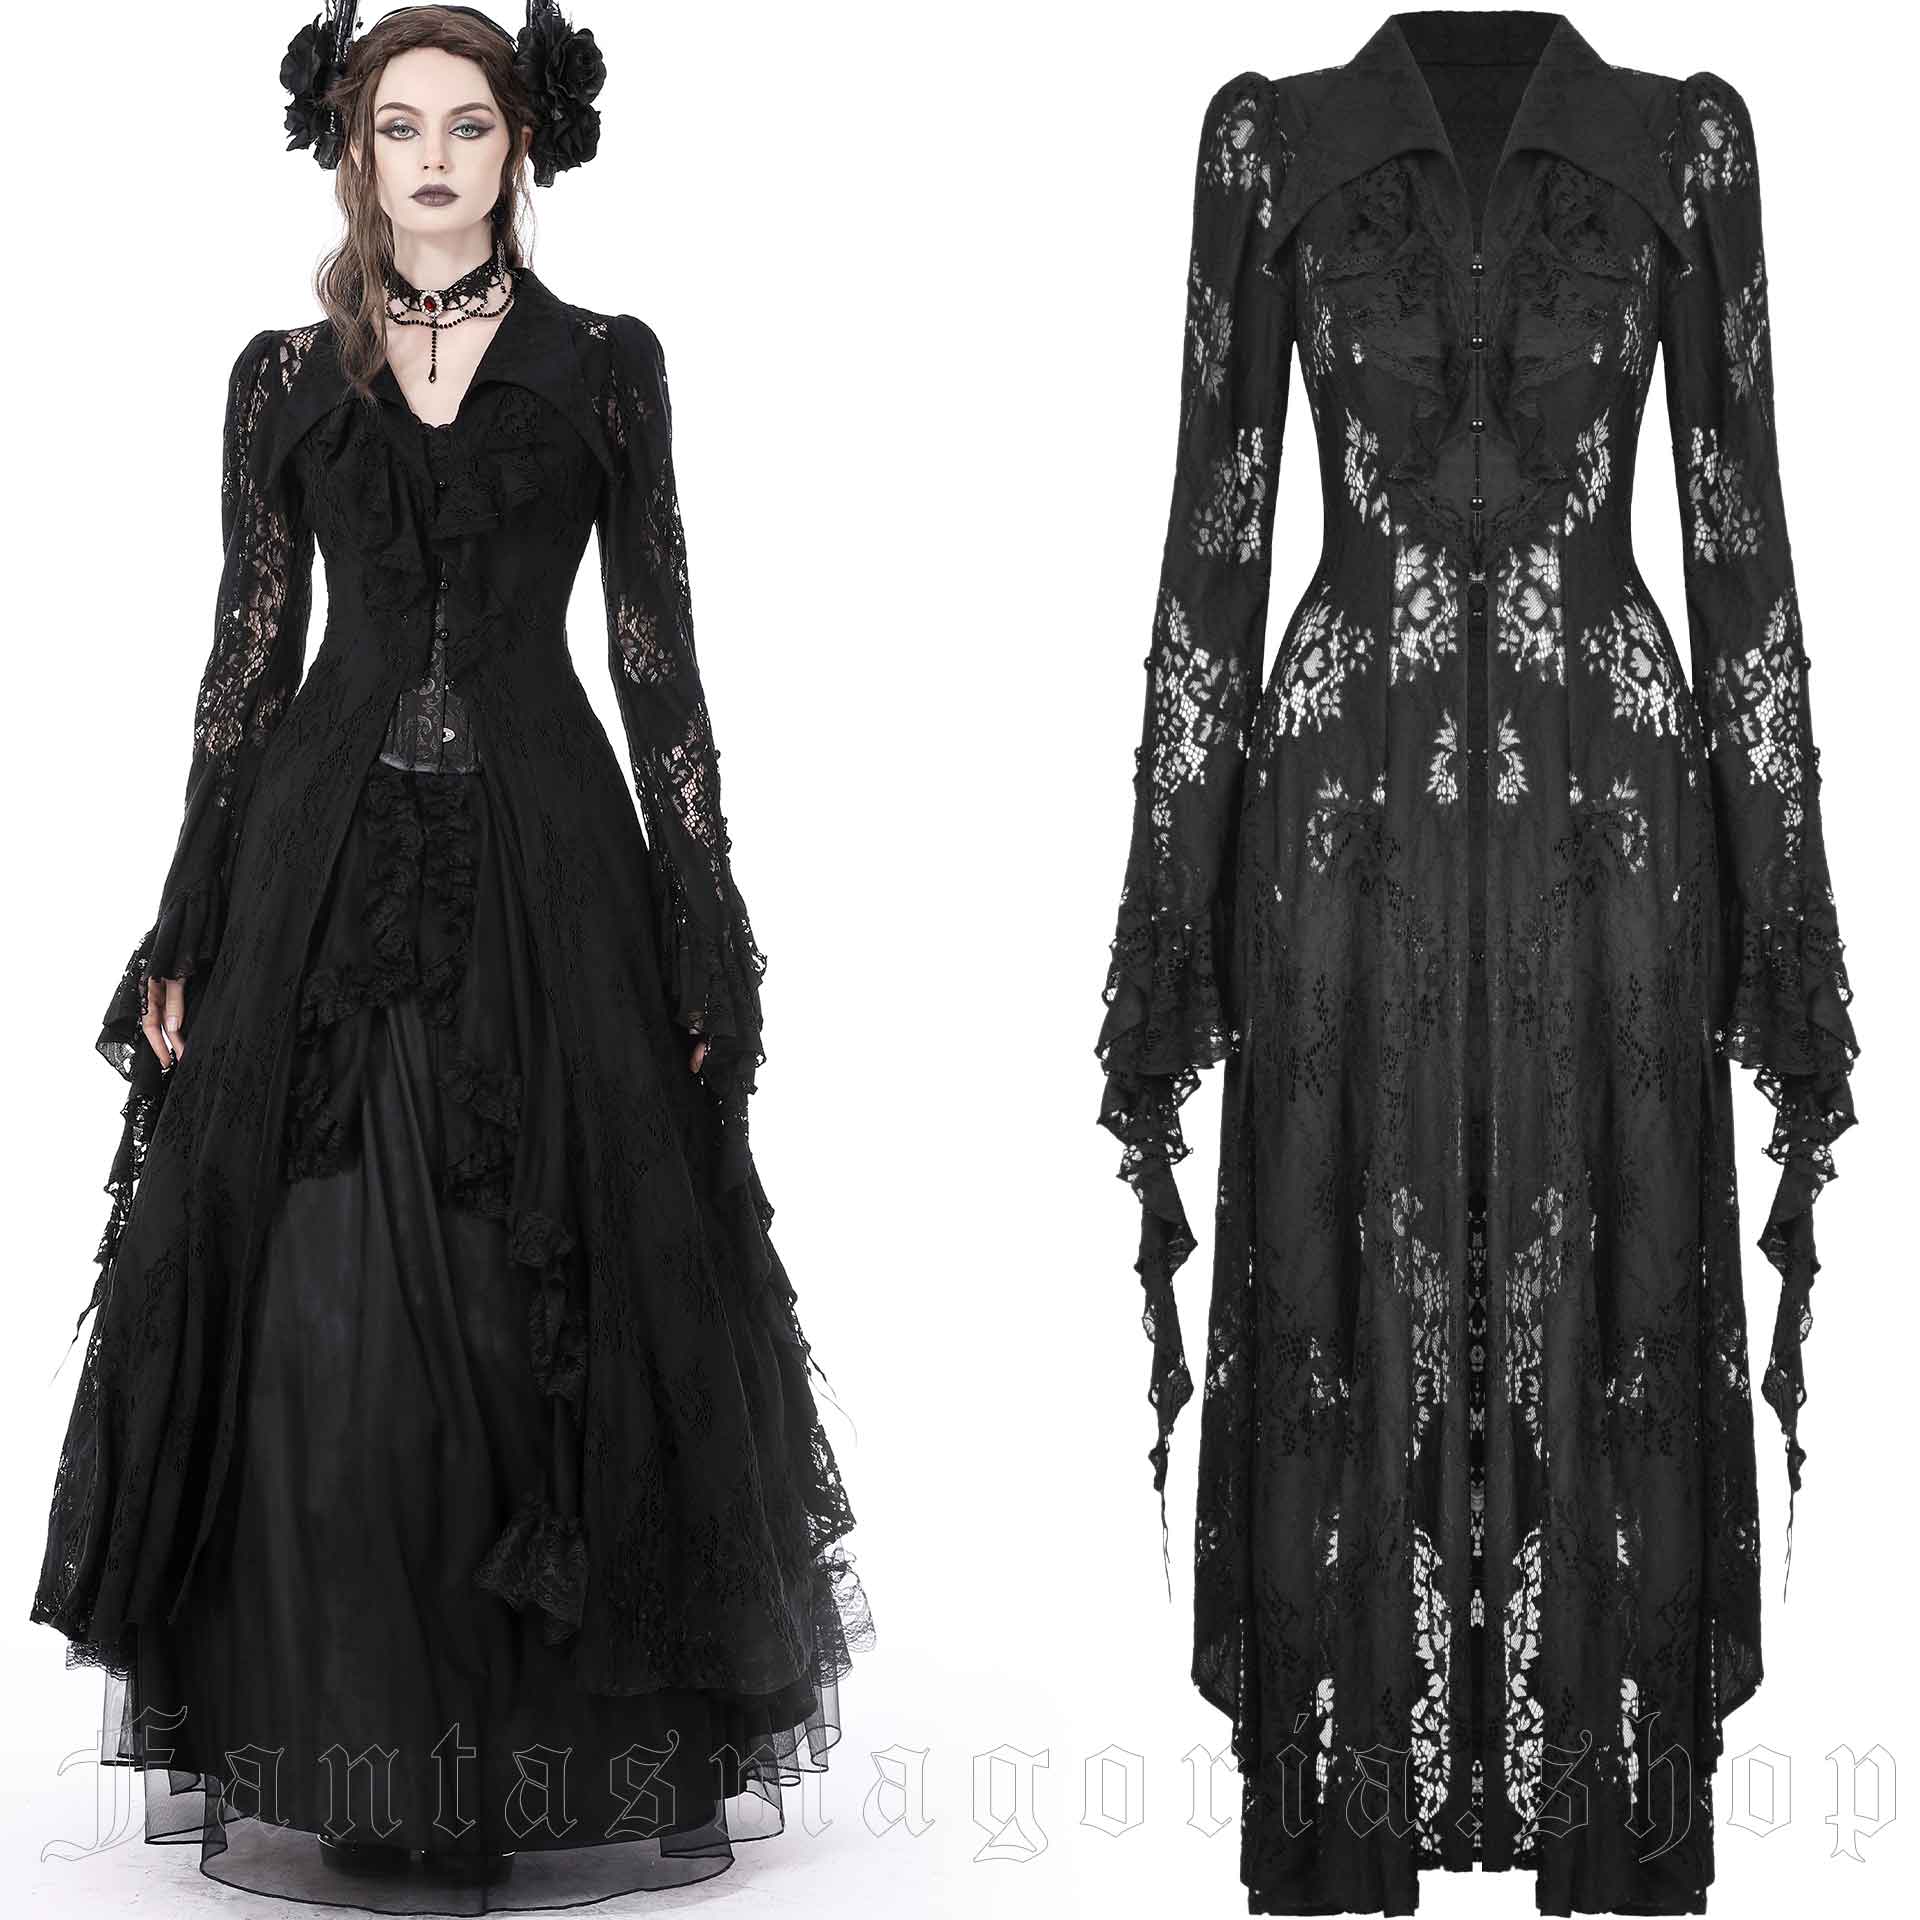 Romantic Gothic black lace shirt overdress.